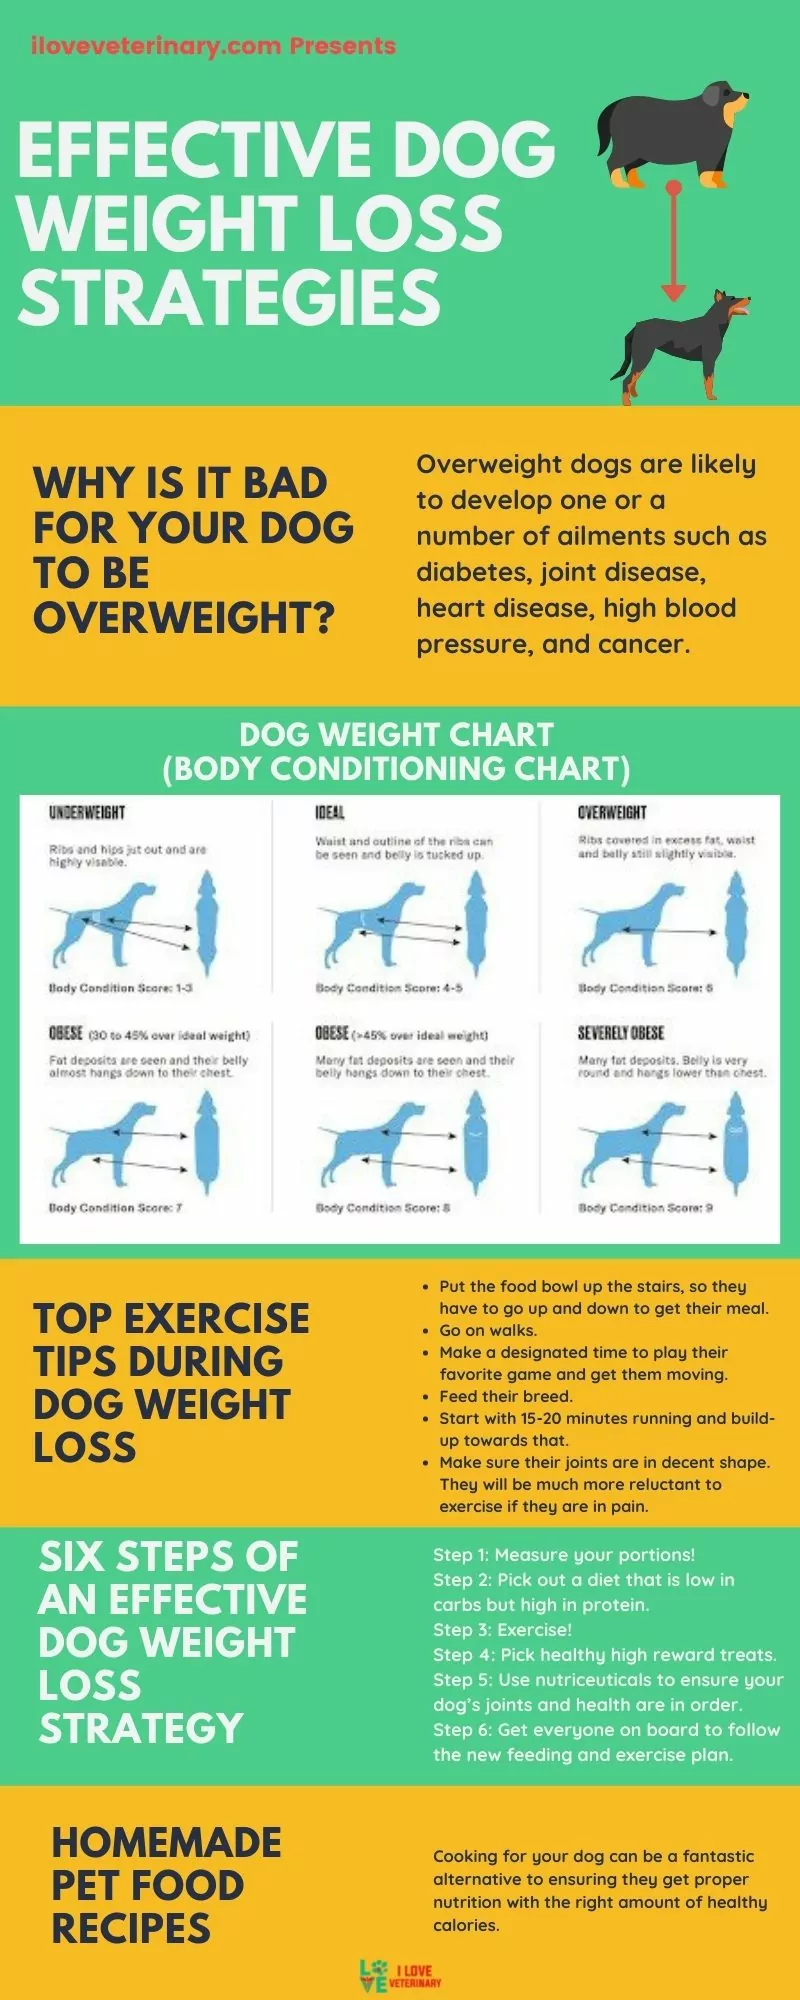 Effective Dog Weight Loss Strategies I Love Veterinary - Blog for Veterinarians, Vet Techs, Students